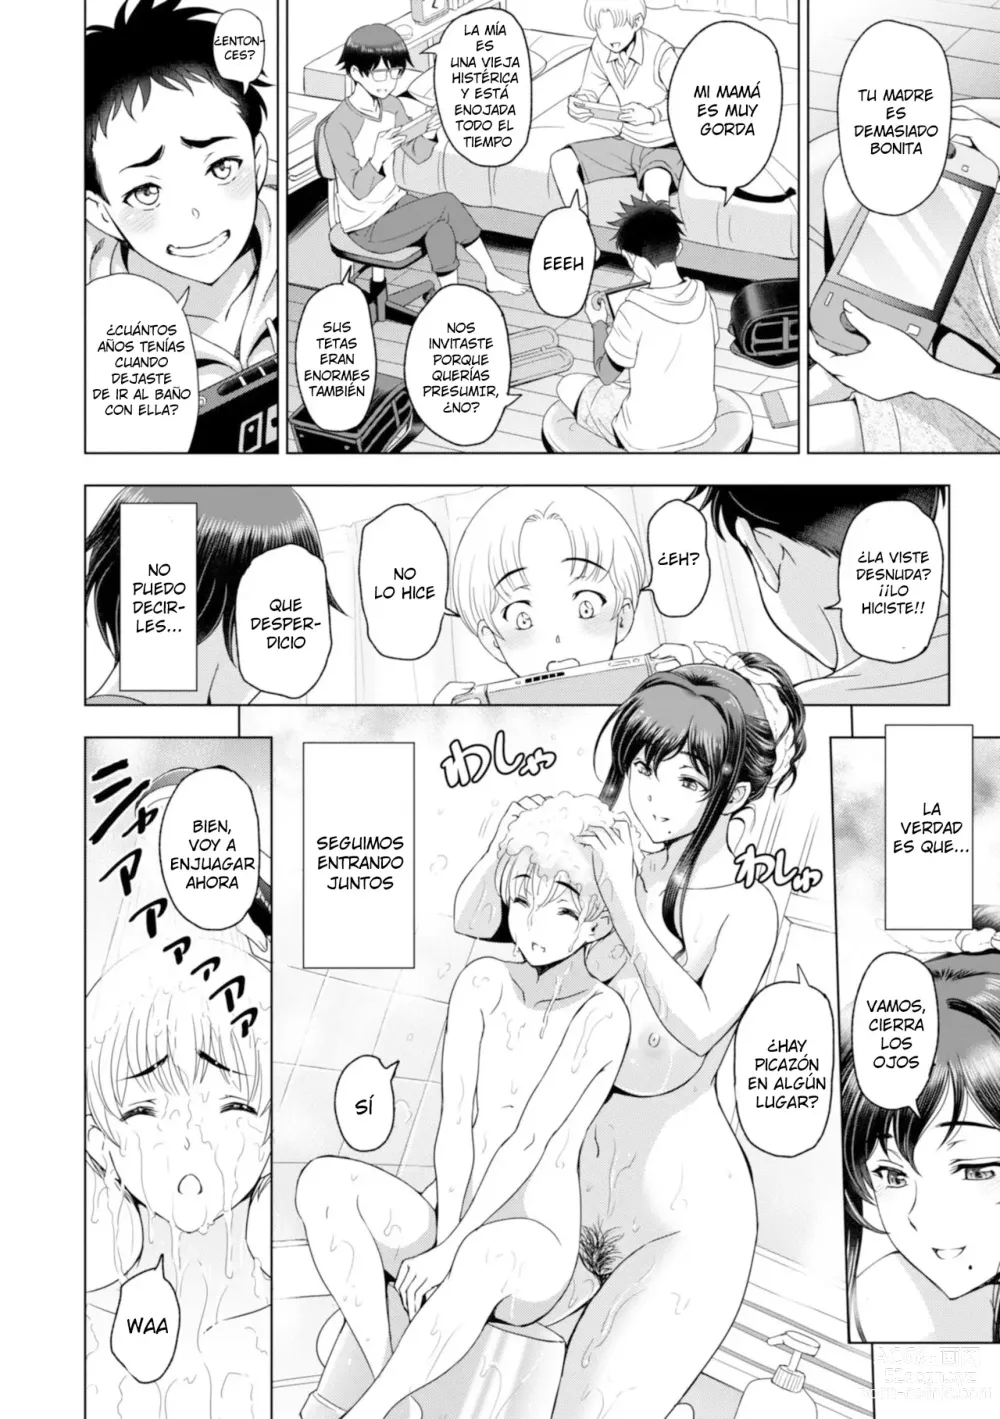 Page 6 of manga Nettori Netorare EP. 0.5, EP. 11.5 ~Esposa . El caso de Saori Sudou (extra)~